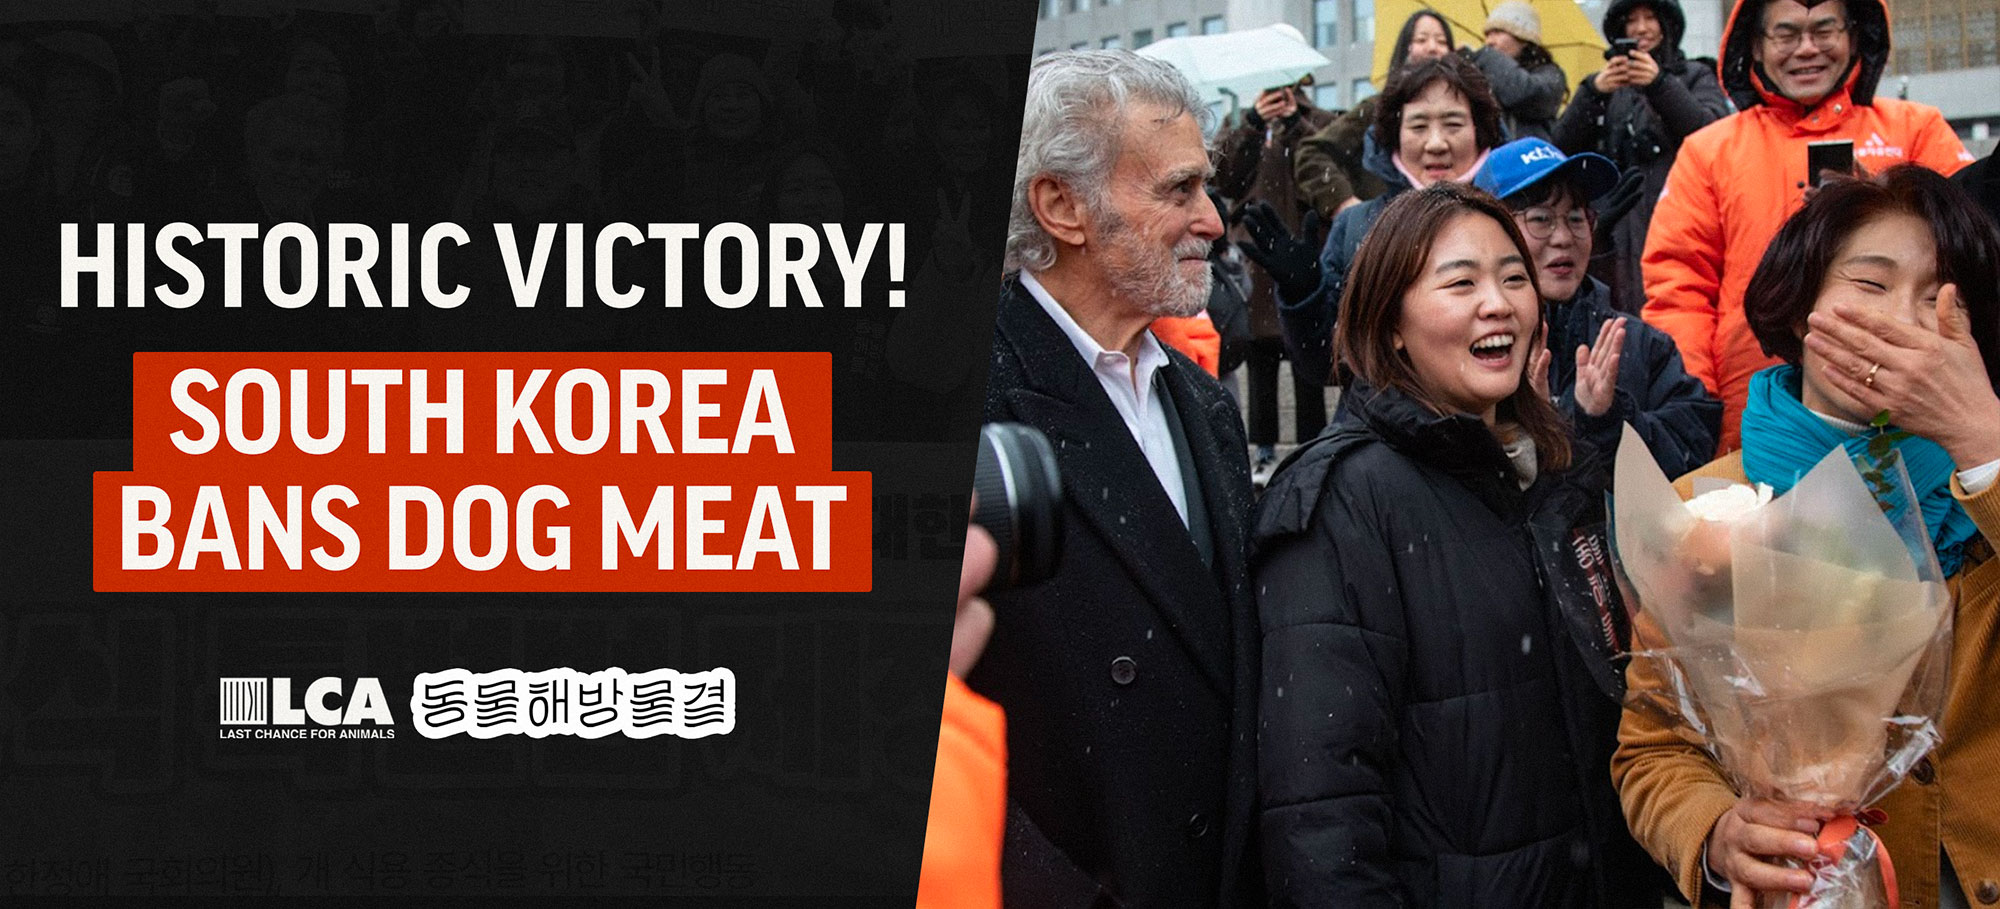 South Korea Bans Dog Meat